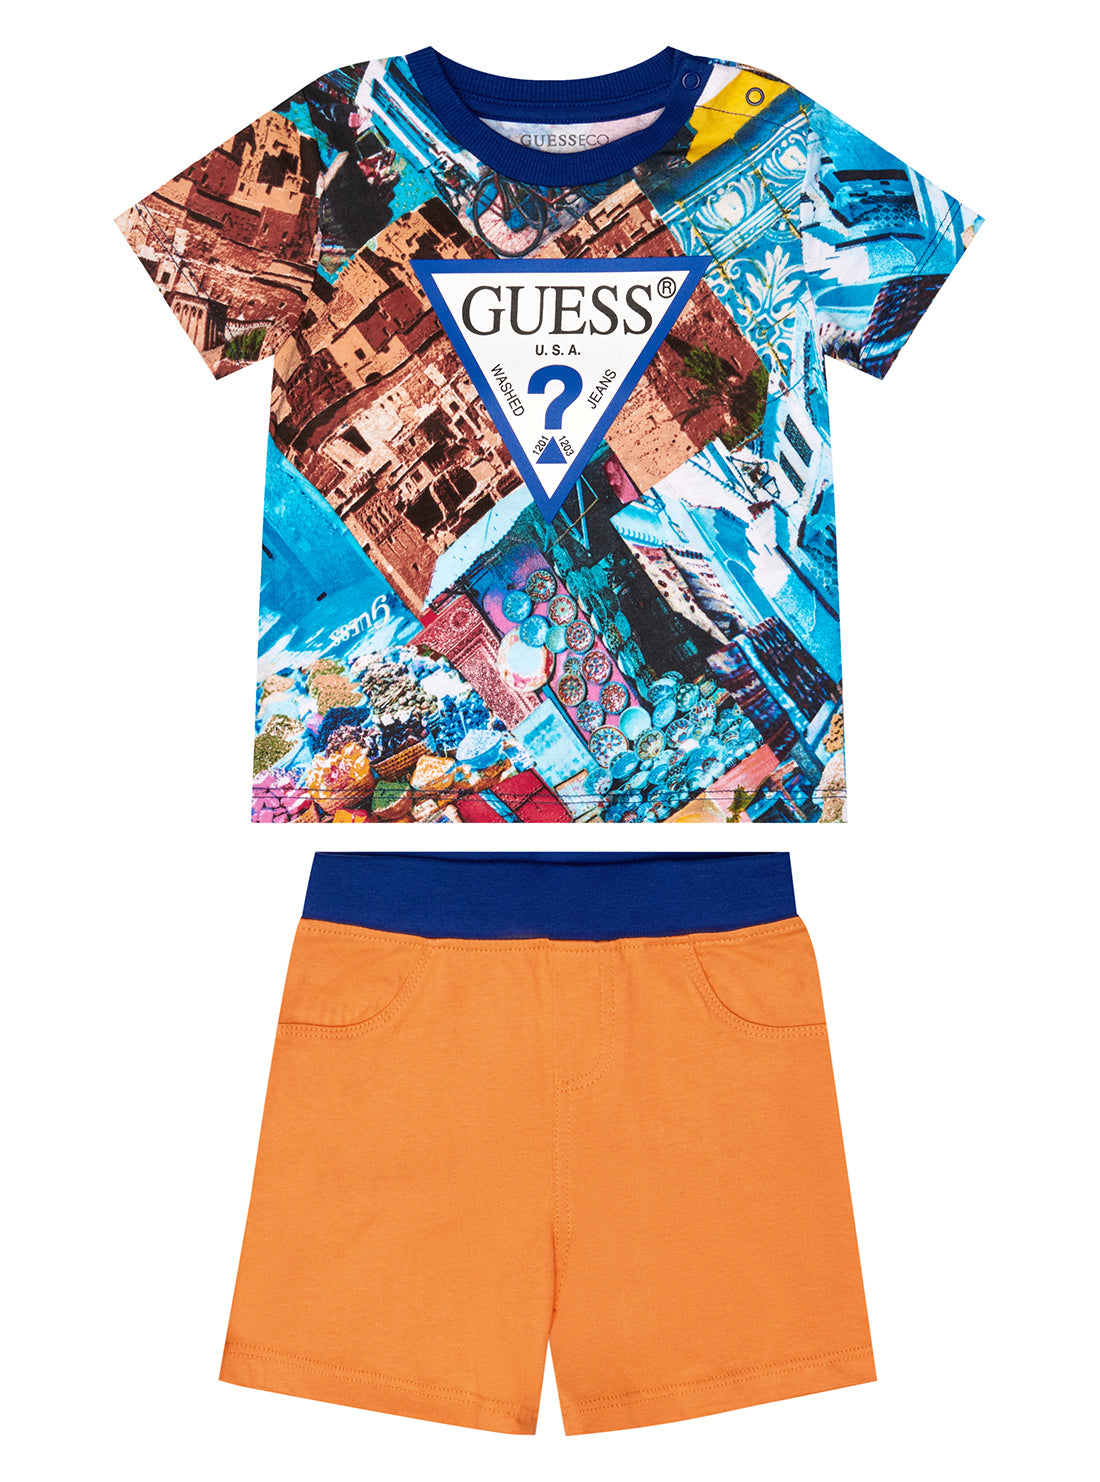 Orange Geo-metric Print T-Shirt and Shorts Baby boy's 2-Piece Set front view